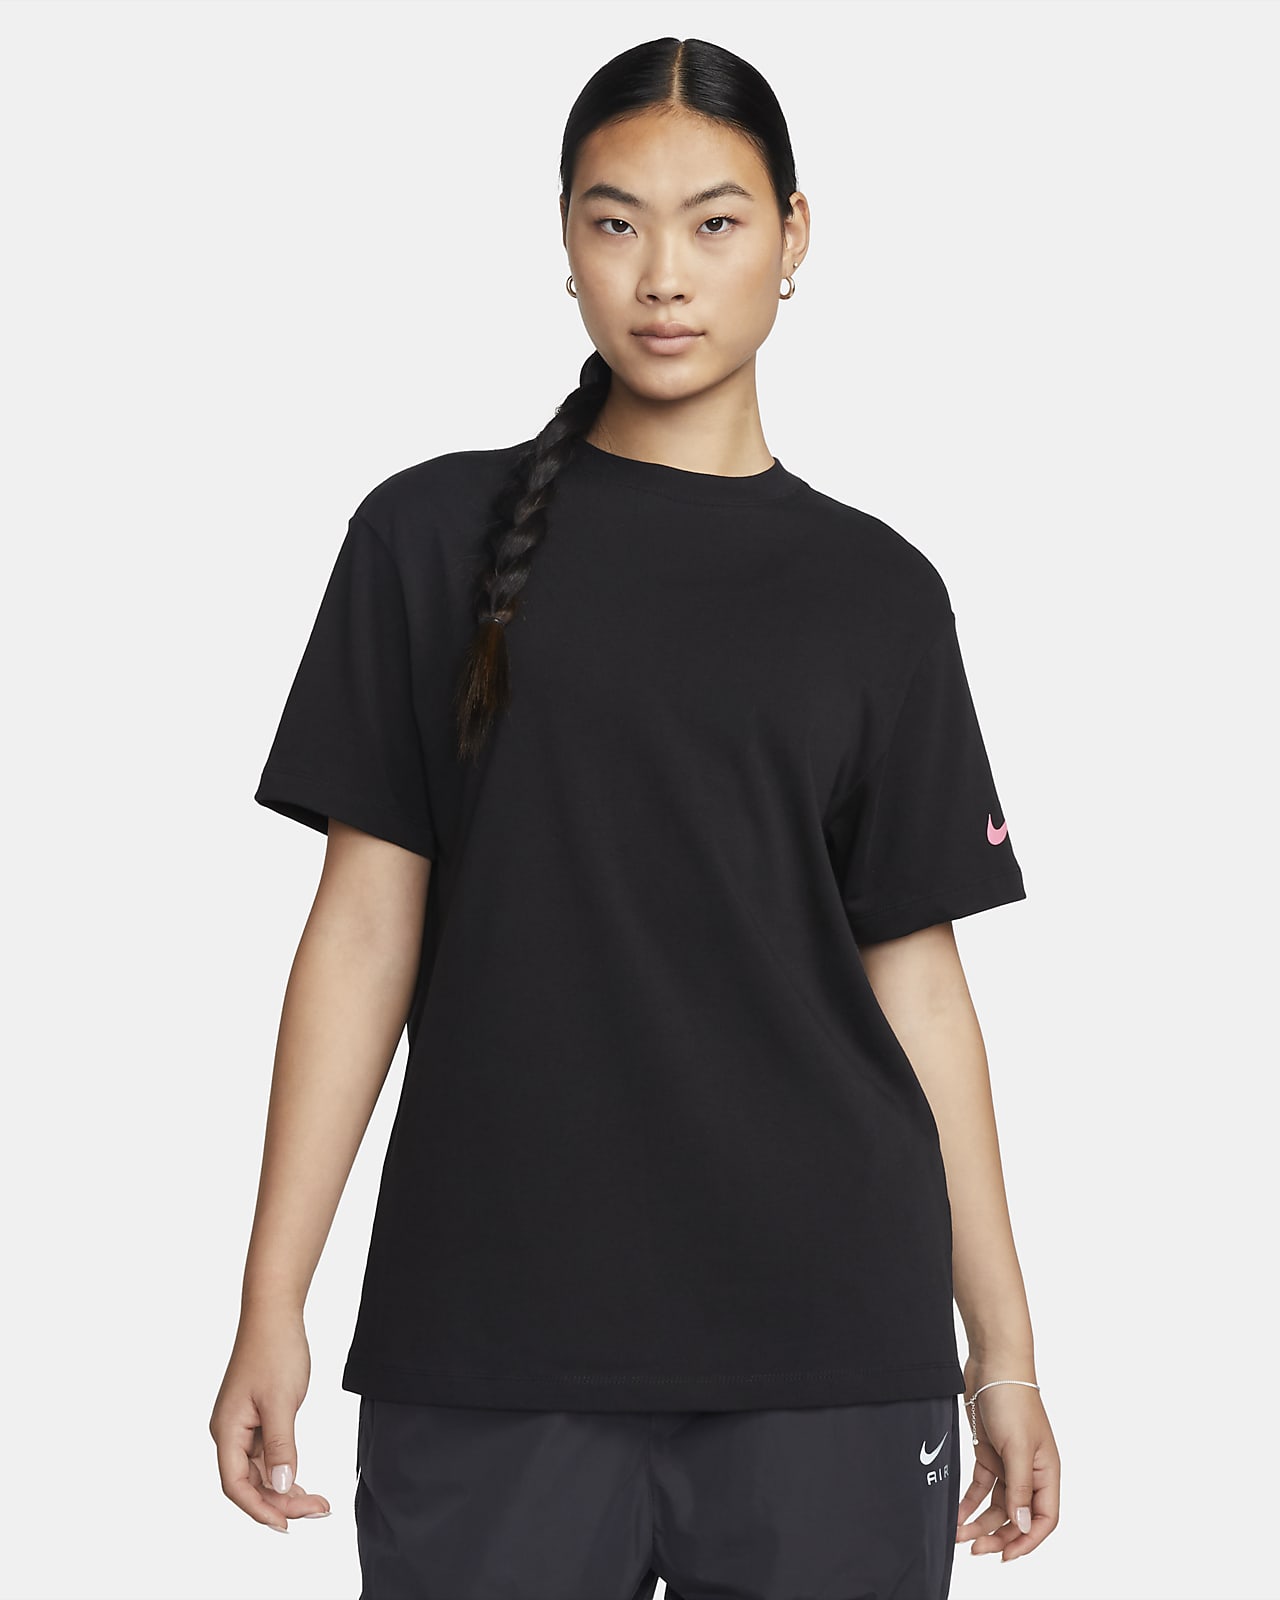 Nike Sportswear x Megan Rapinoe Women's T-Shirt. Nike SE